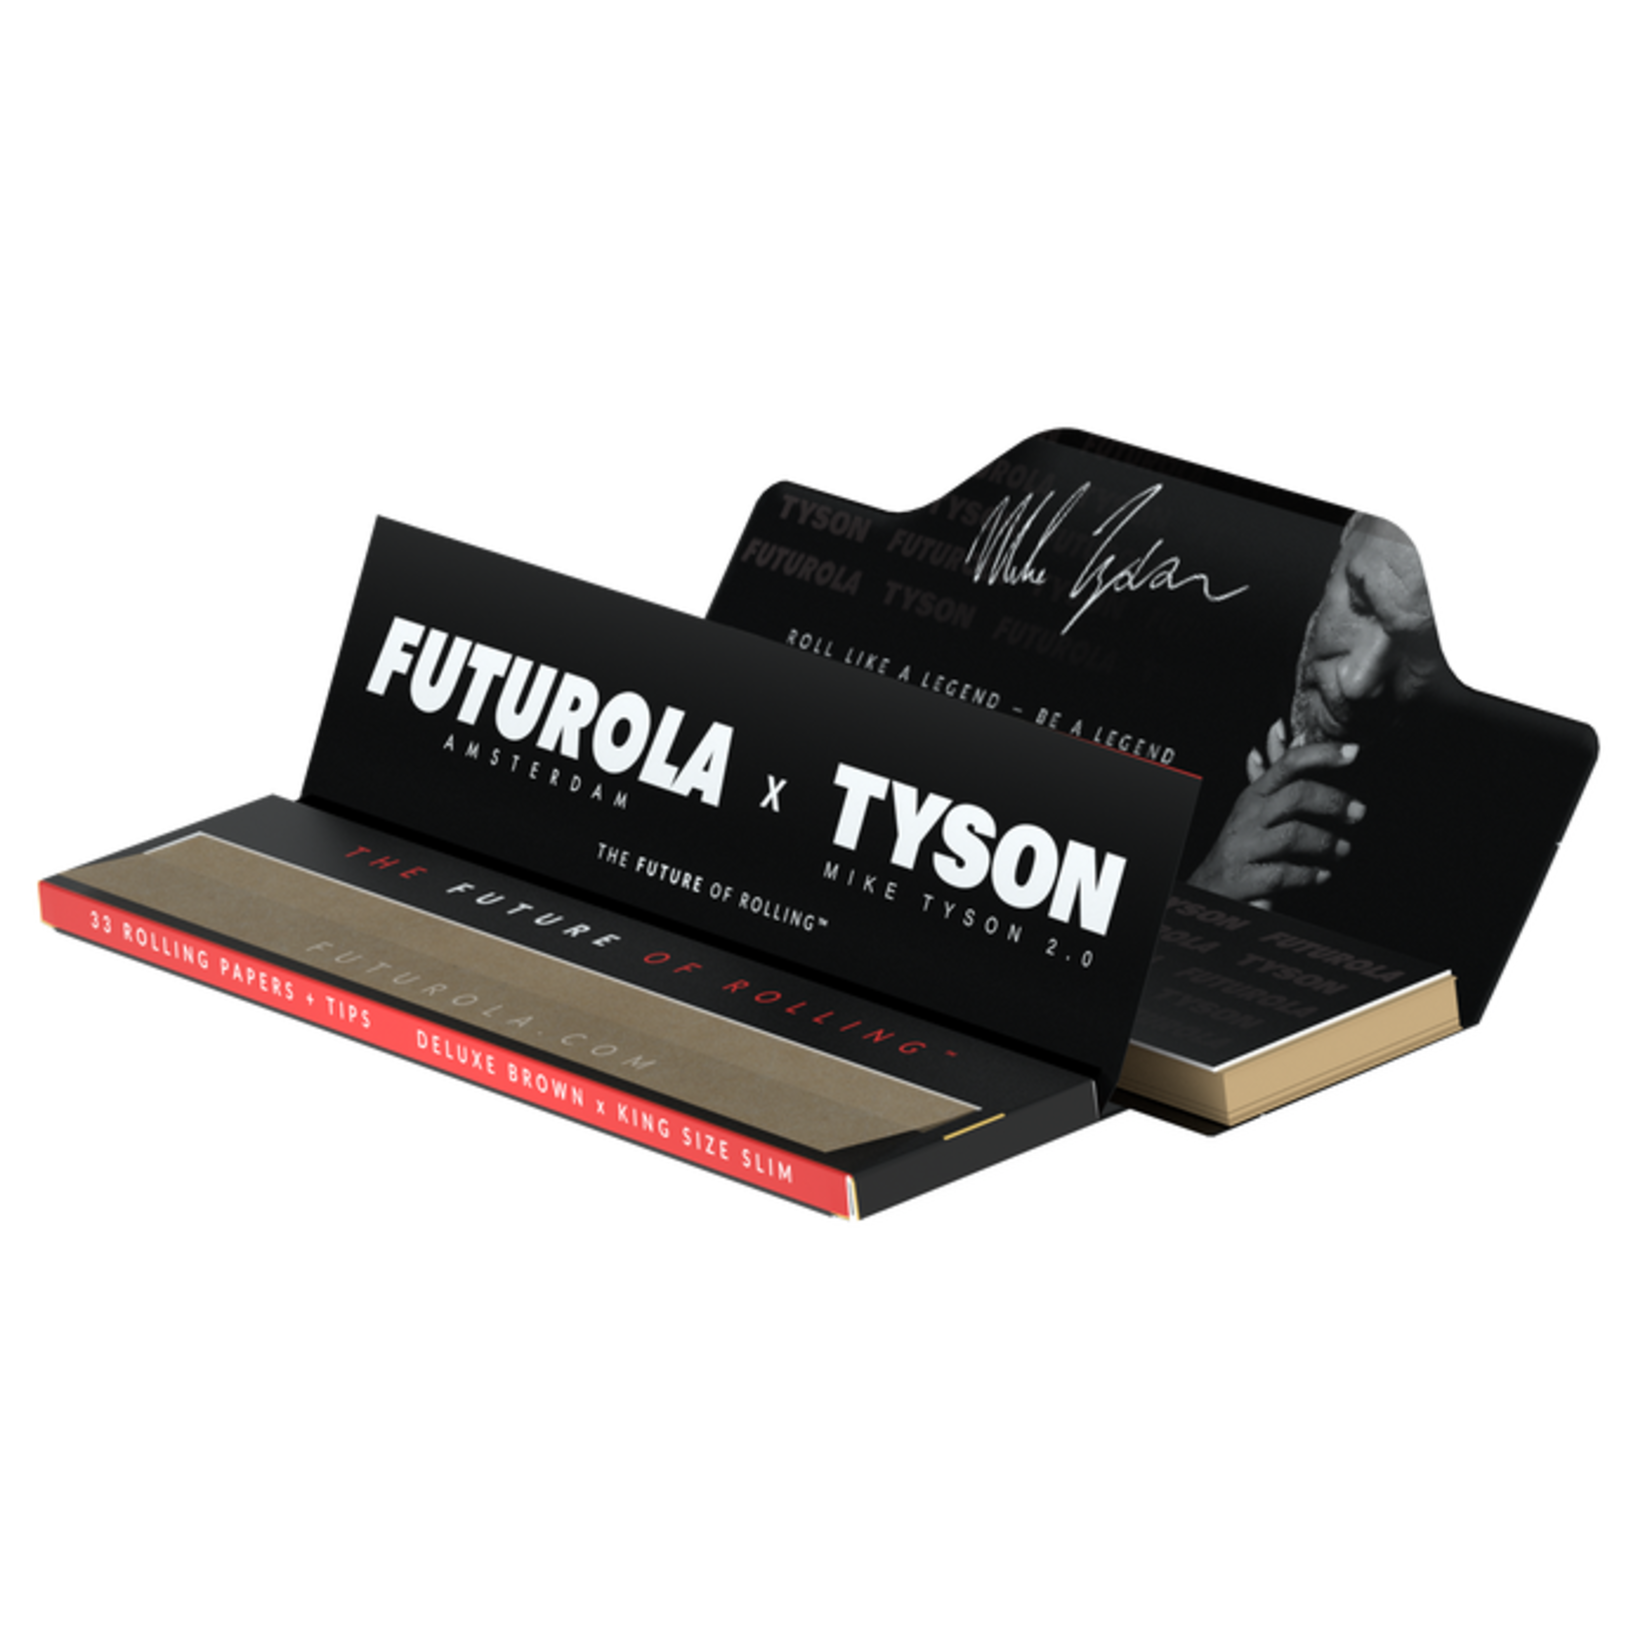 Tyson Ranch Tyson Ranch x Futurola King Size Slim Rolling Paper 2.0